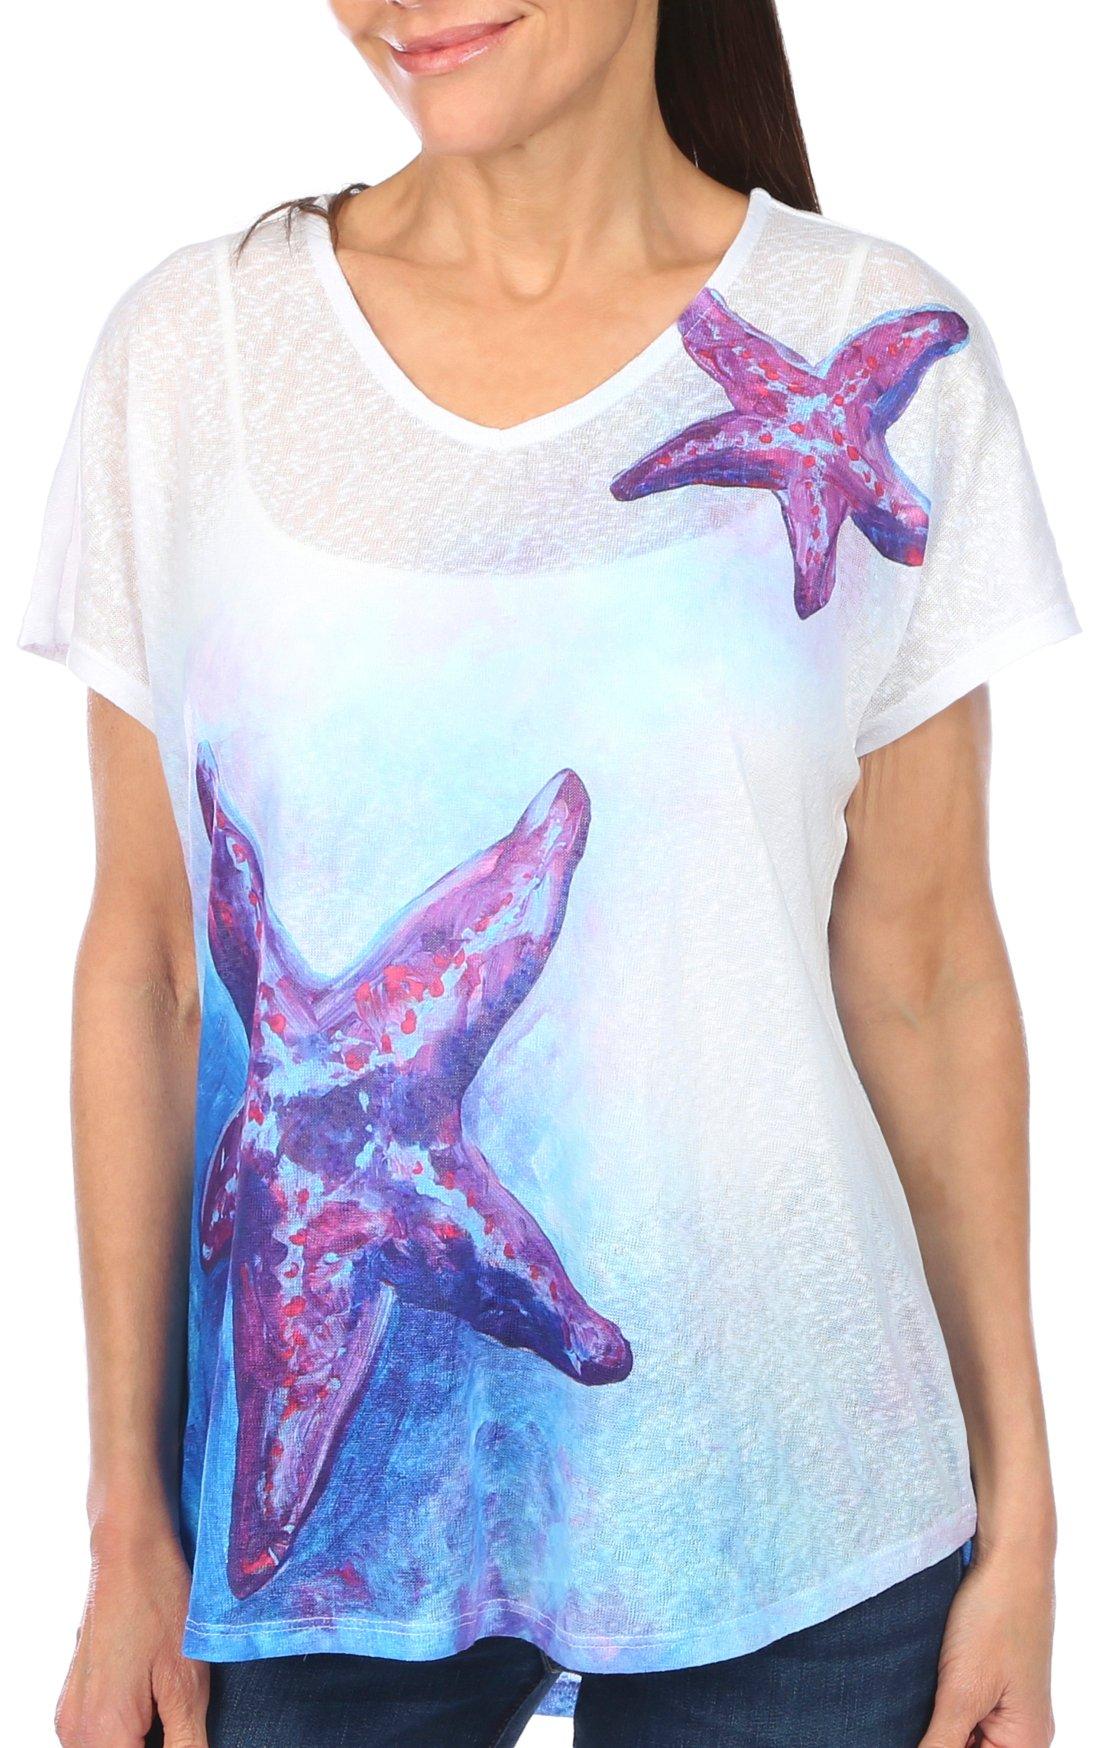 Womens Starfish Dolman Short Sleeve Top